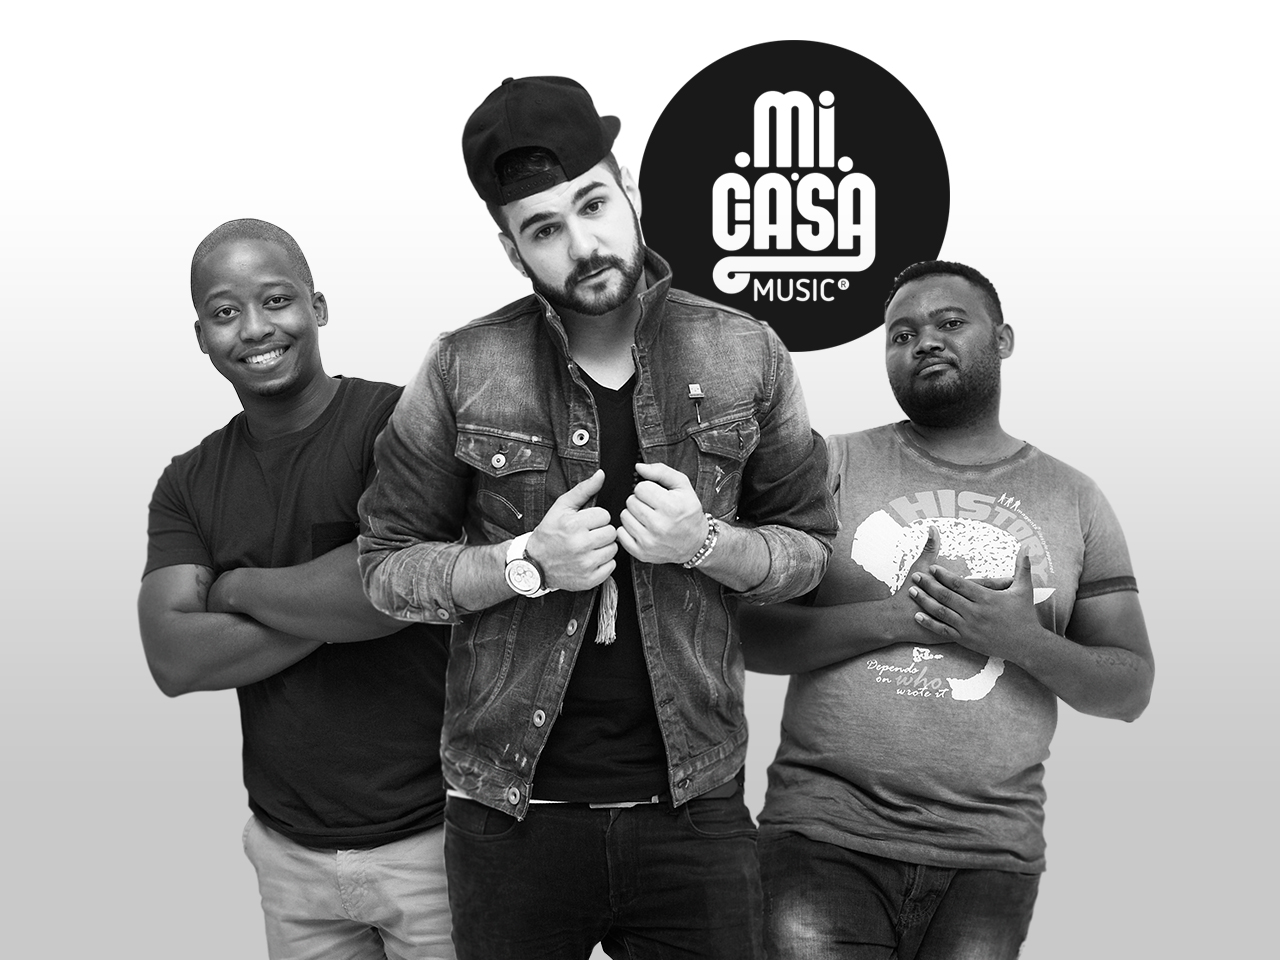 Mi Casa set to perform in Harare, introducing new album